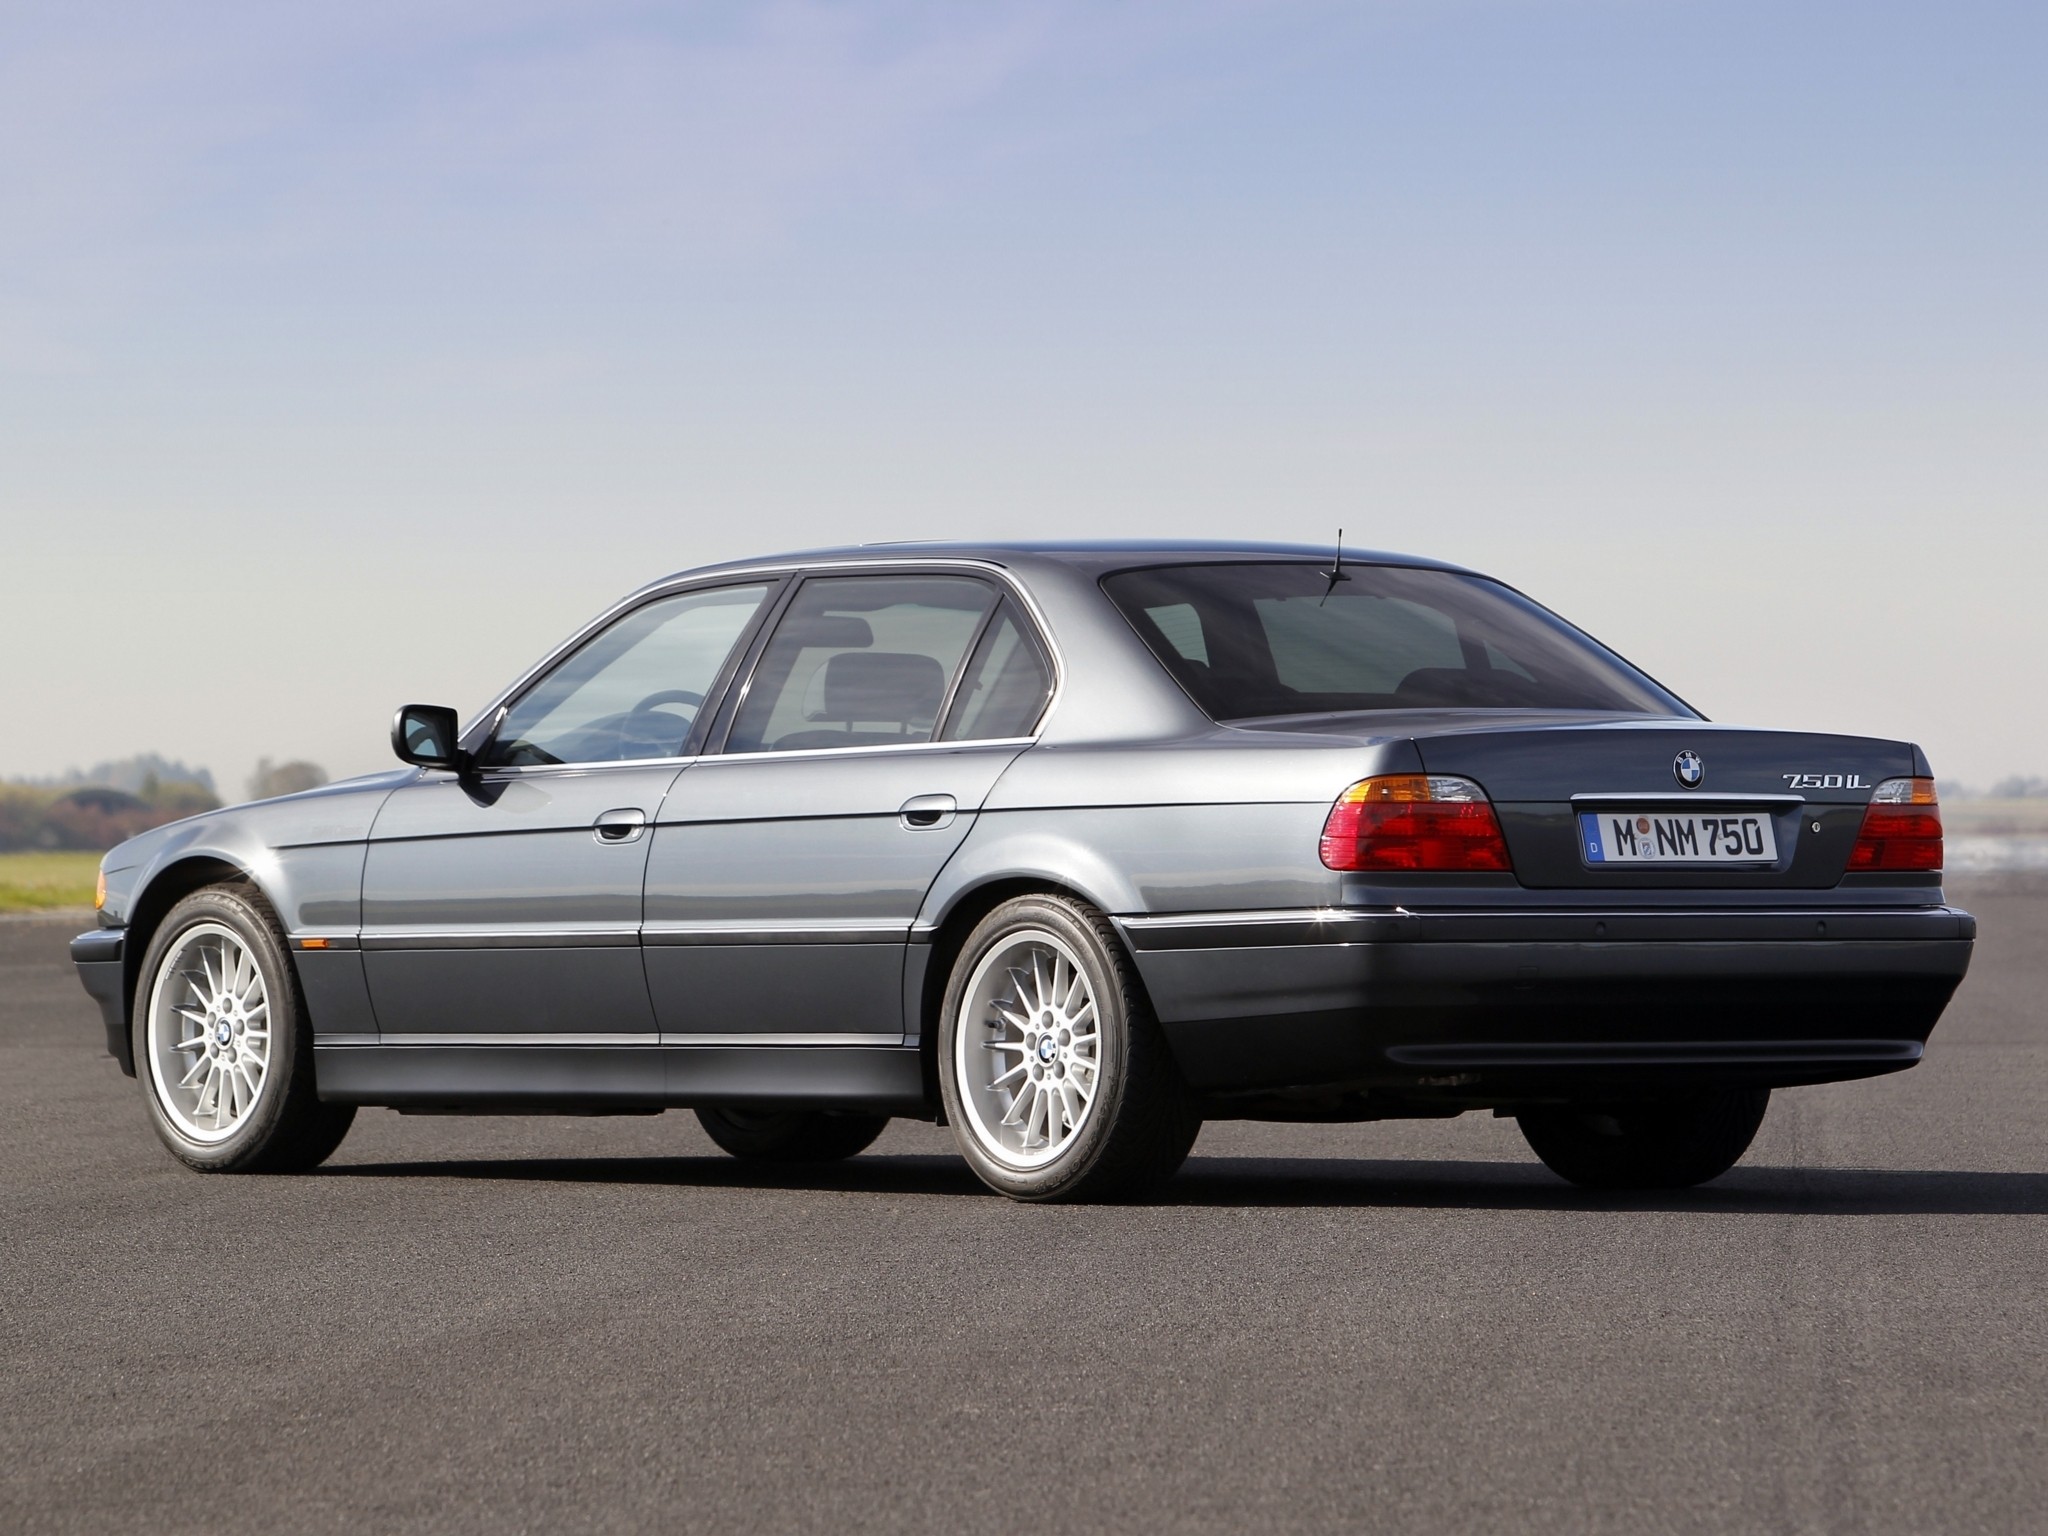 BMW E38 7 Series – Pinnacle of 1990s Luxury Performance插图6